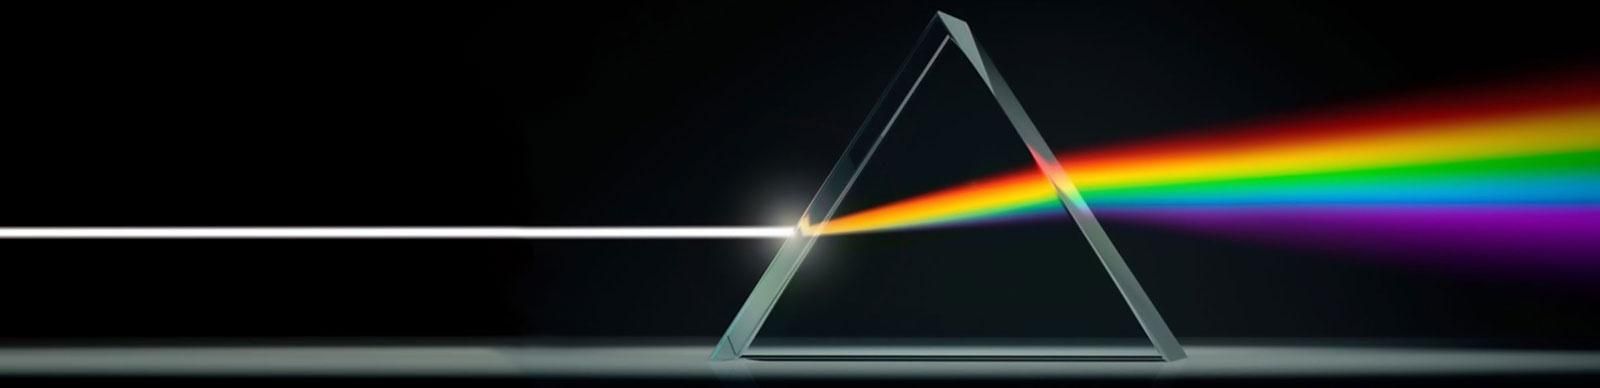 Optical Dispersion in Prism